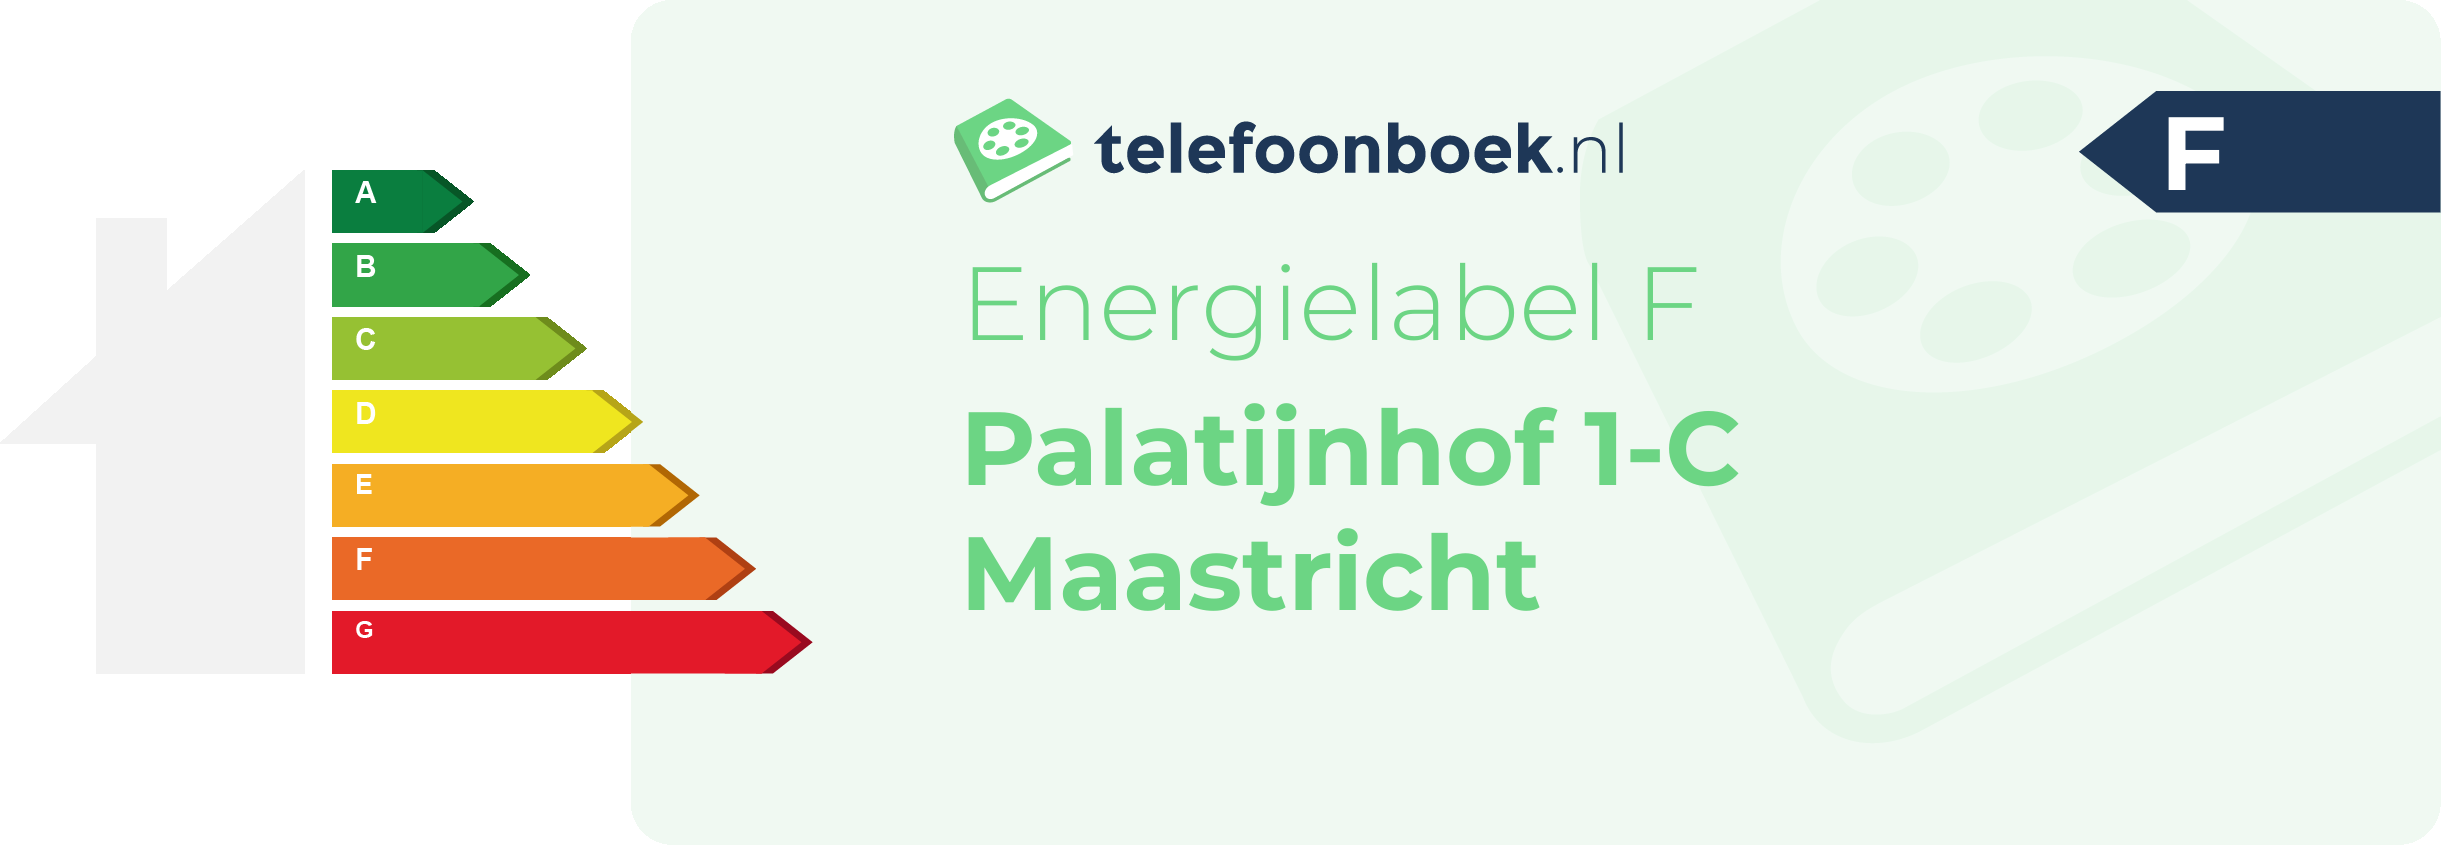 Energielabel Palatijnhof 1-C Maastricht